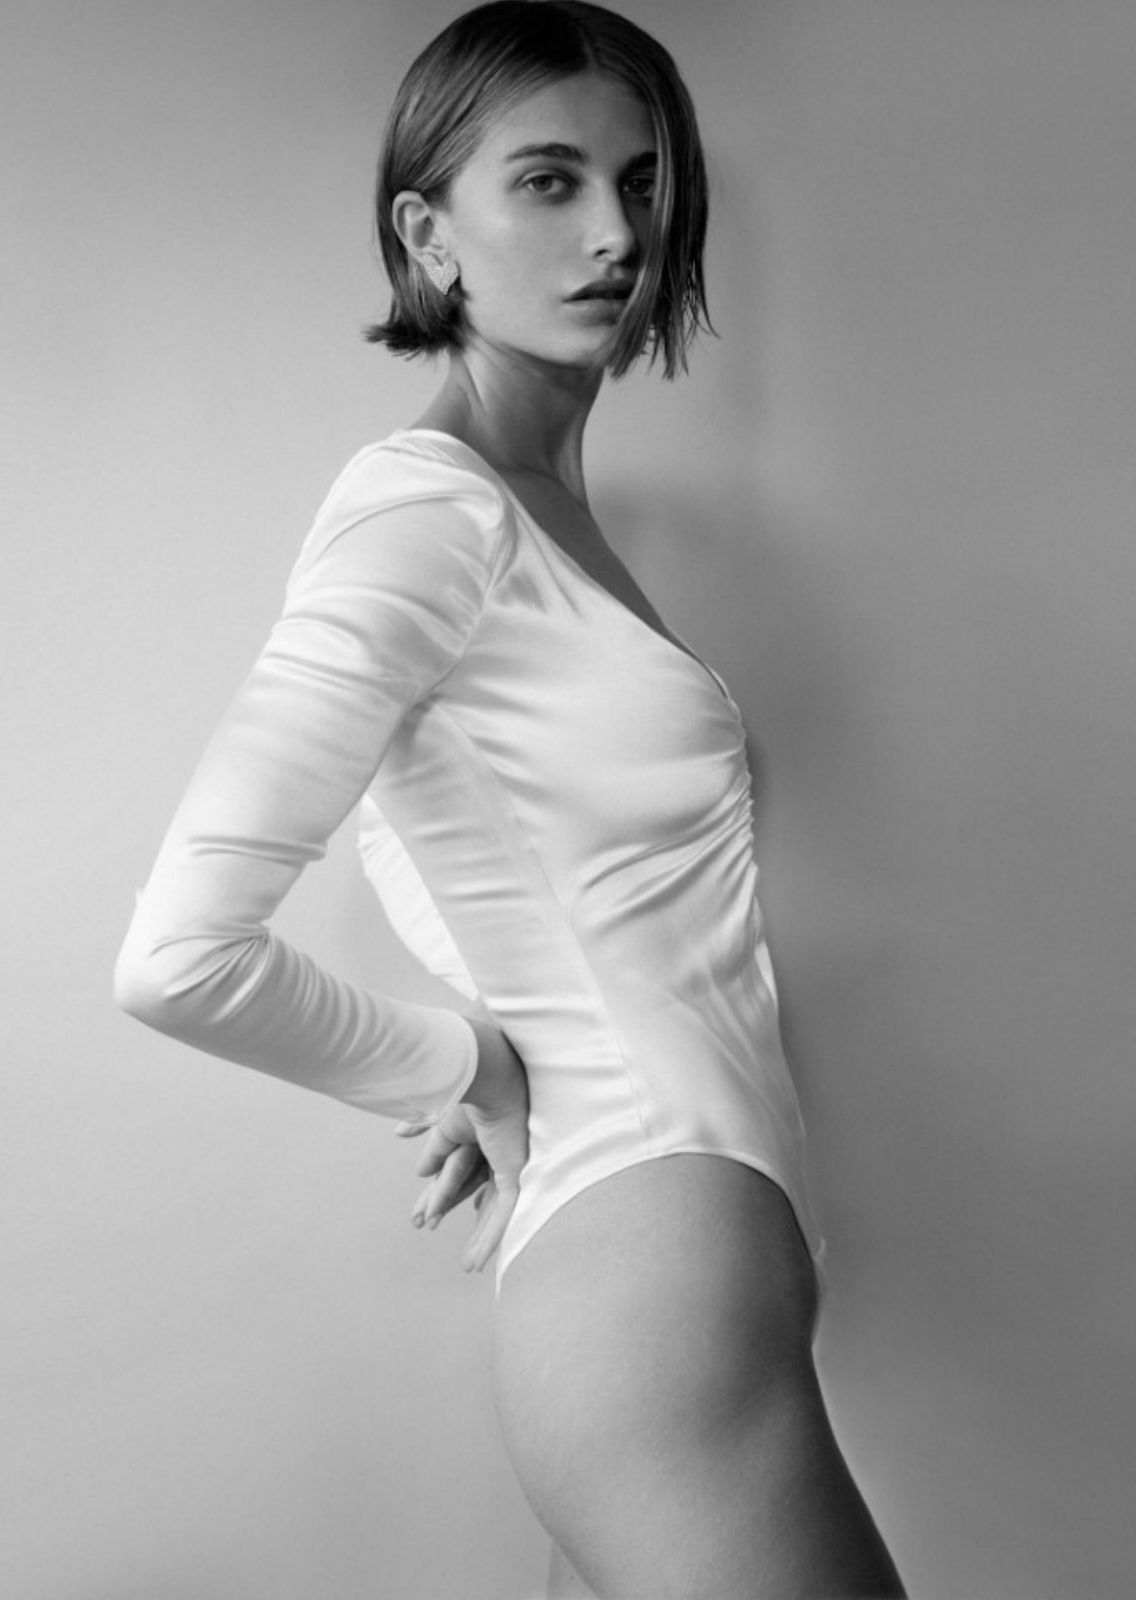 BARBARA MAJDER. Carmen Duran Model Agency.